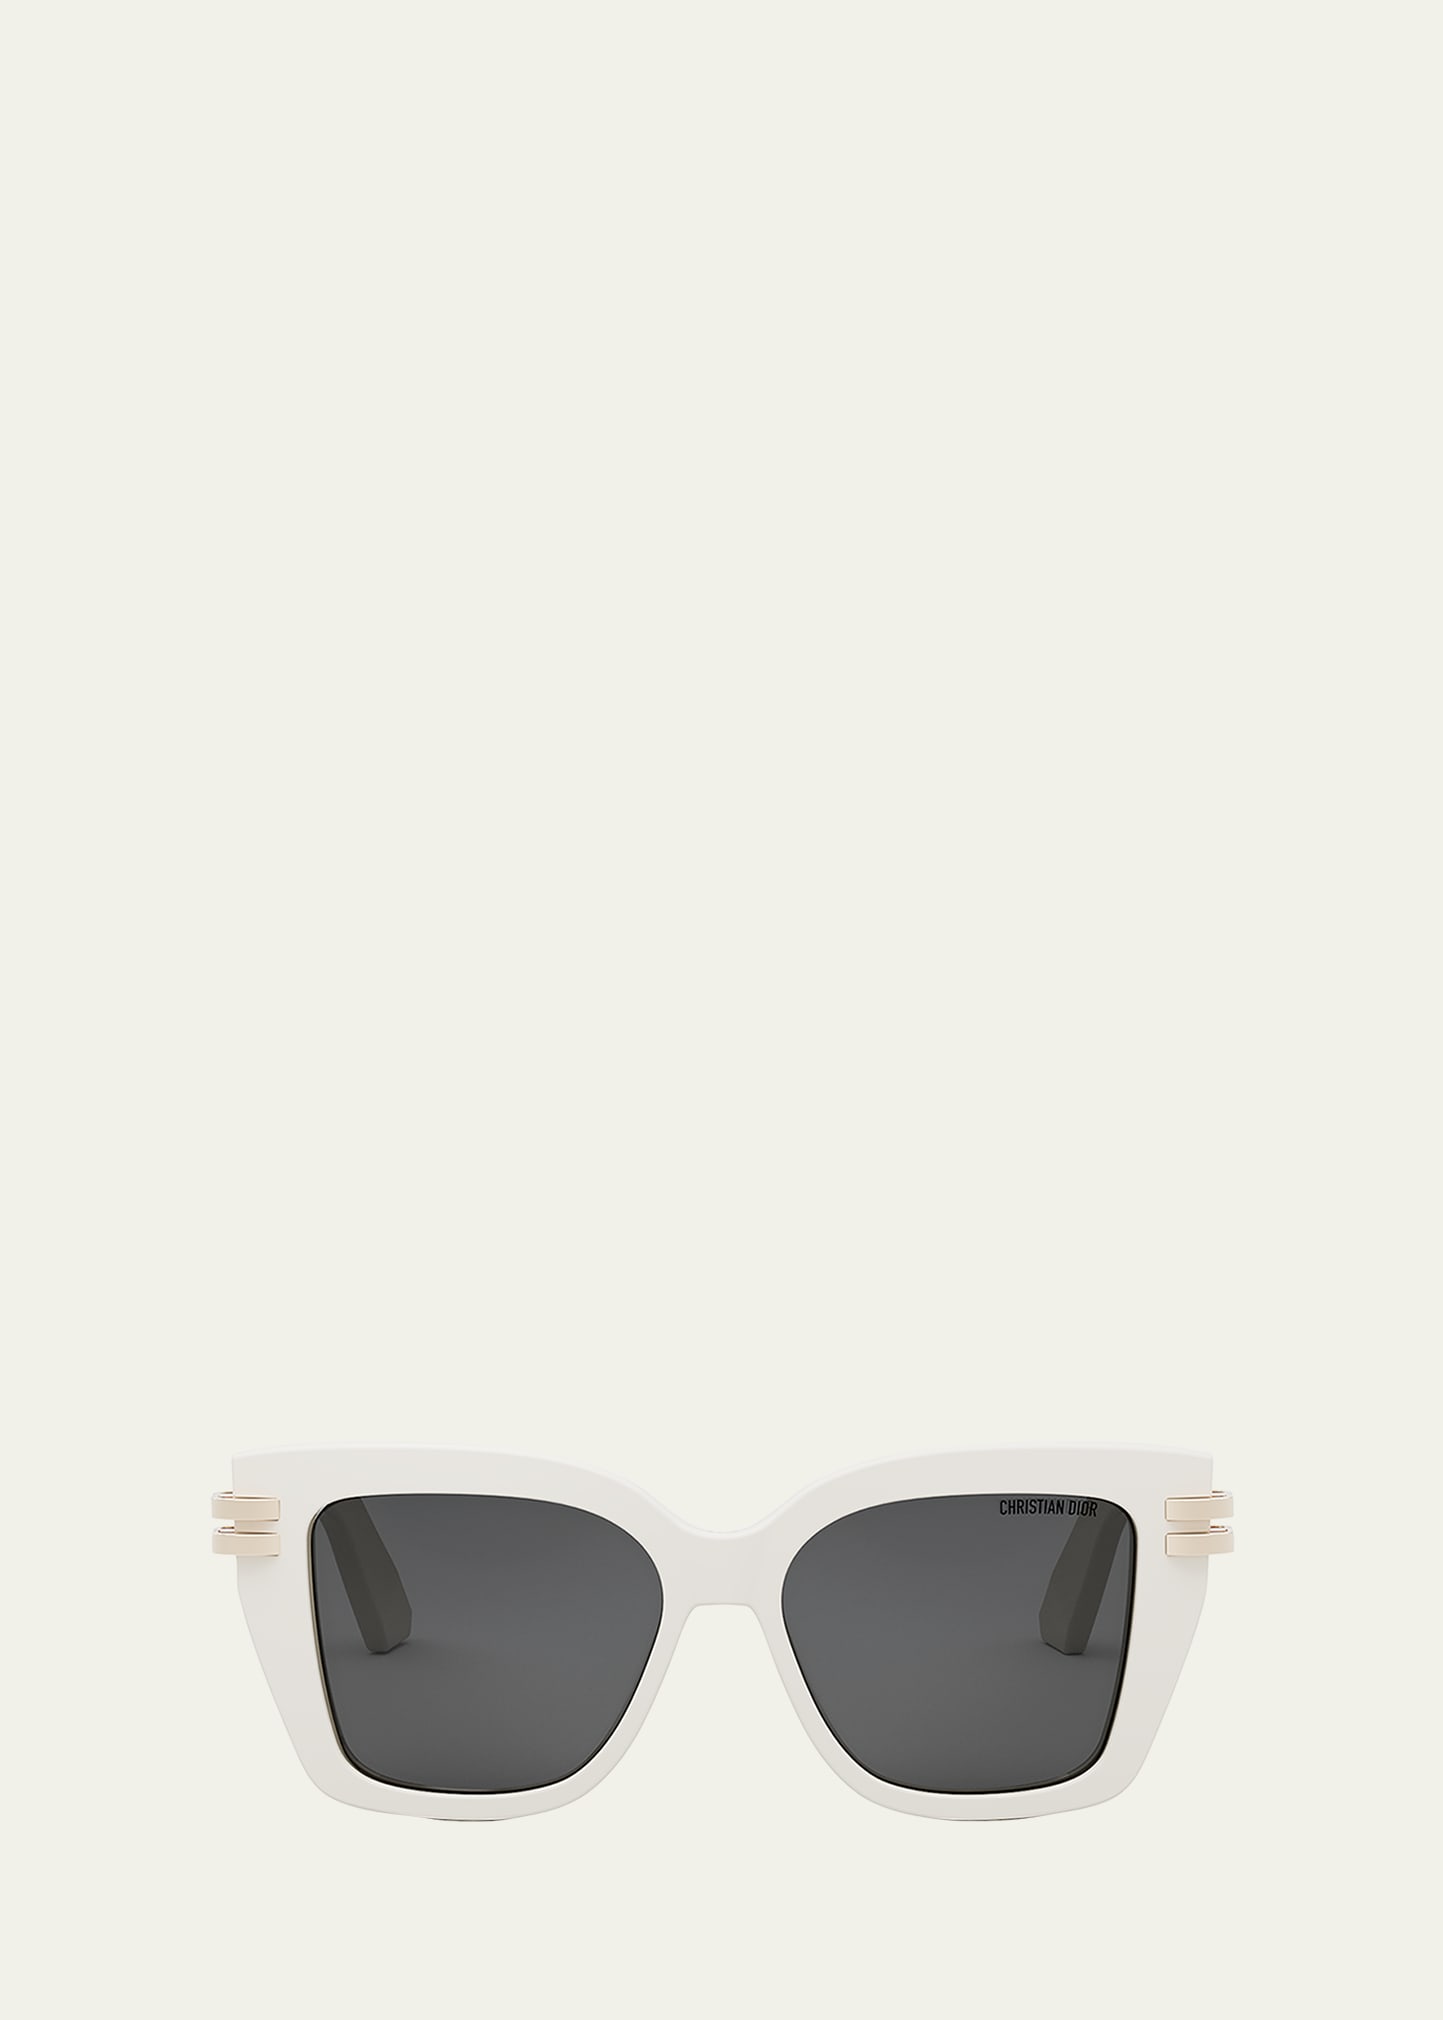 CDior S1I Sunglasses